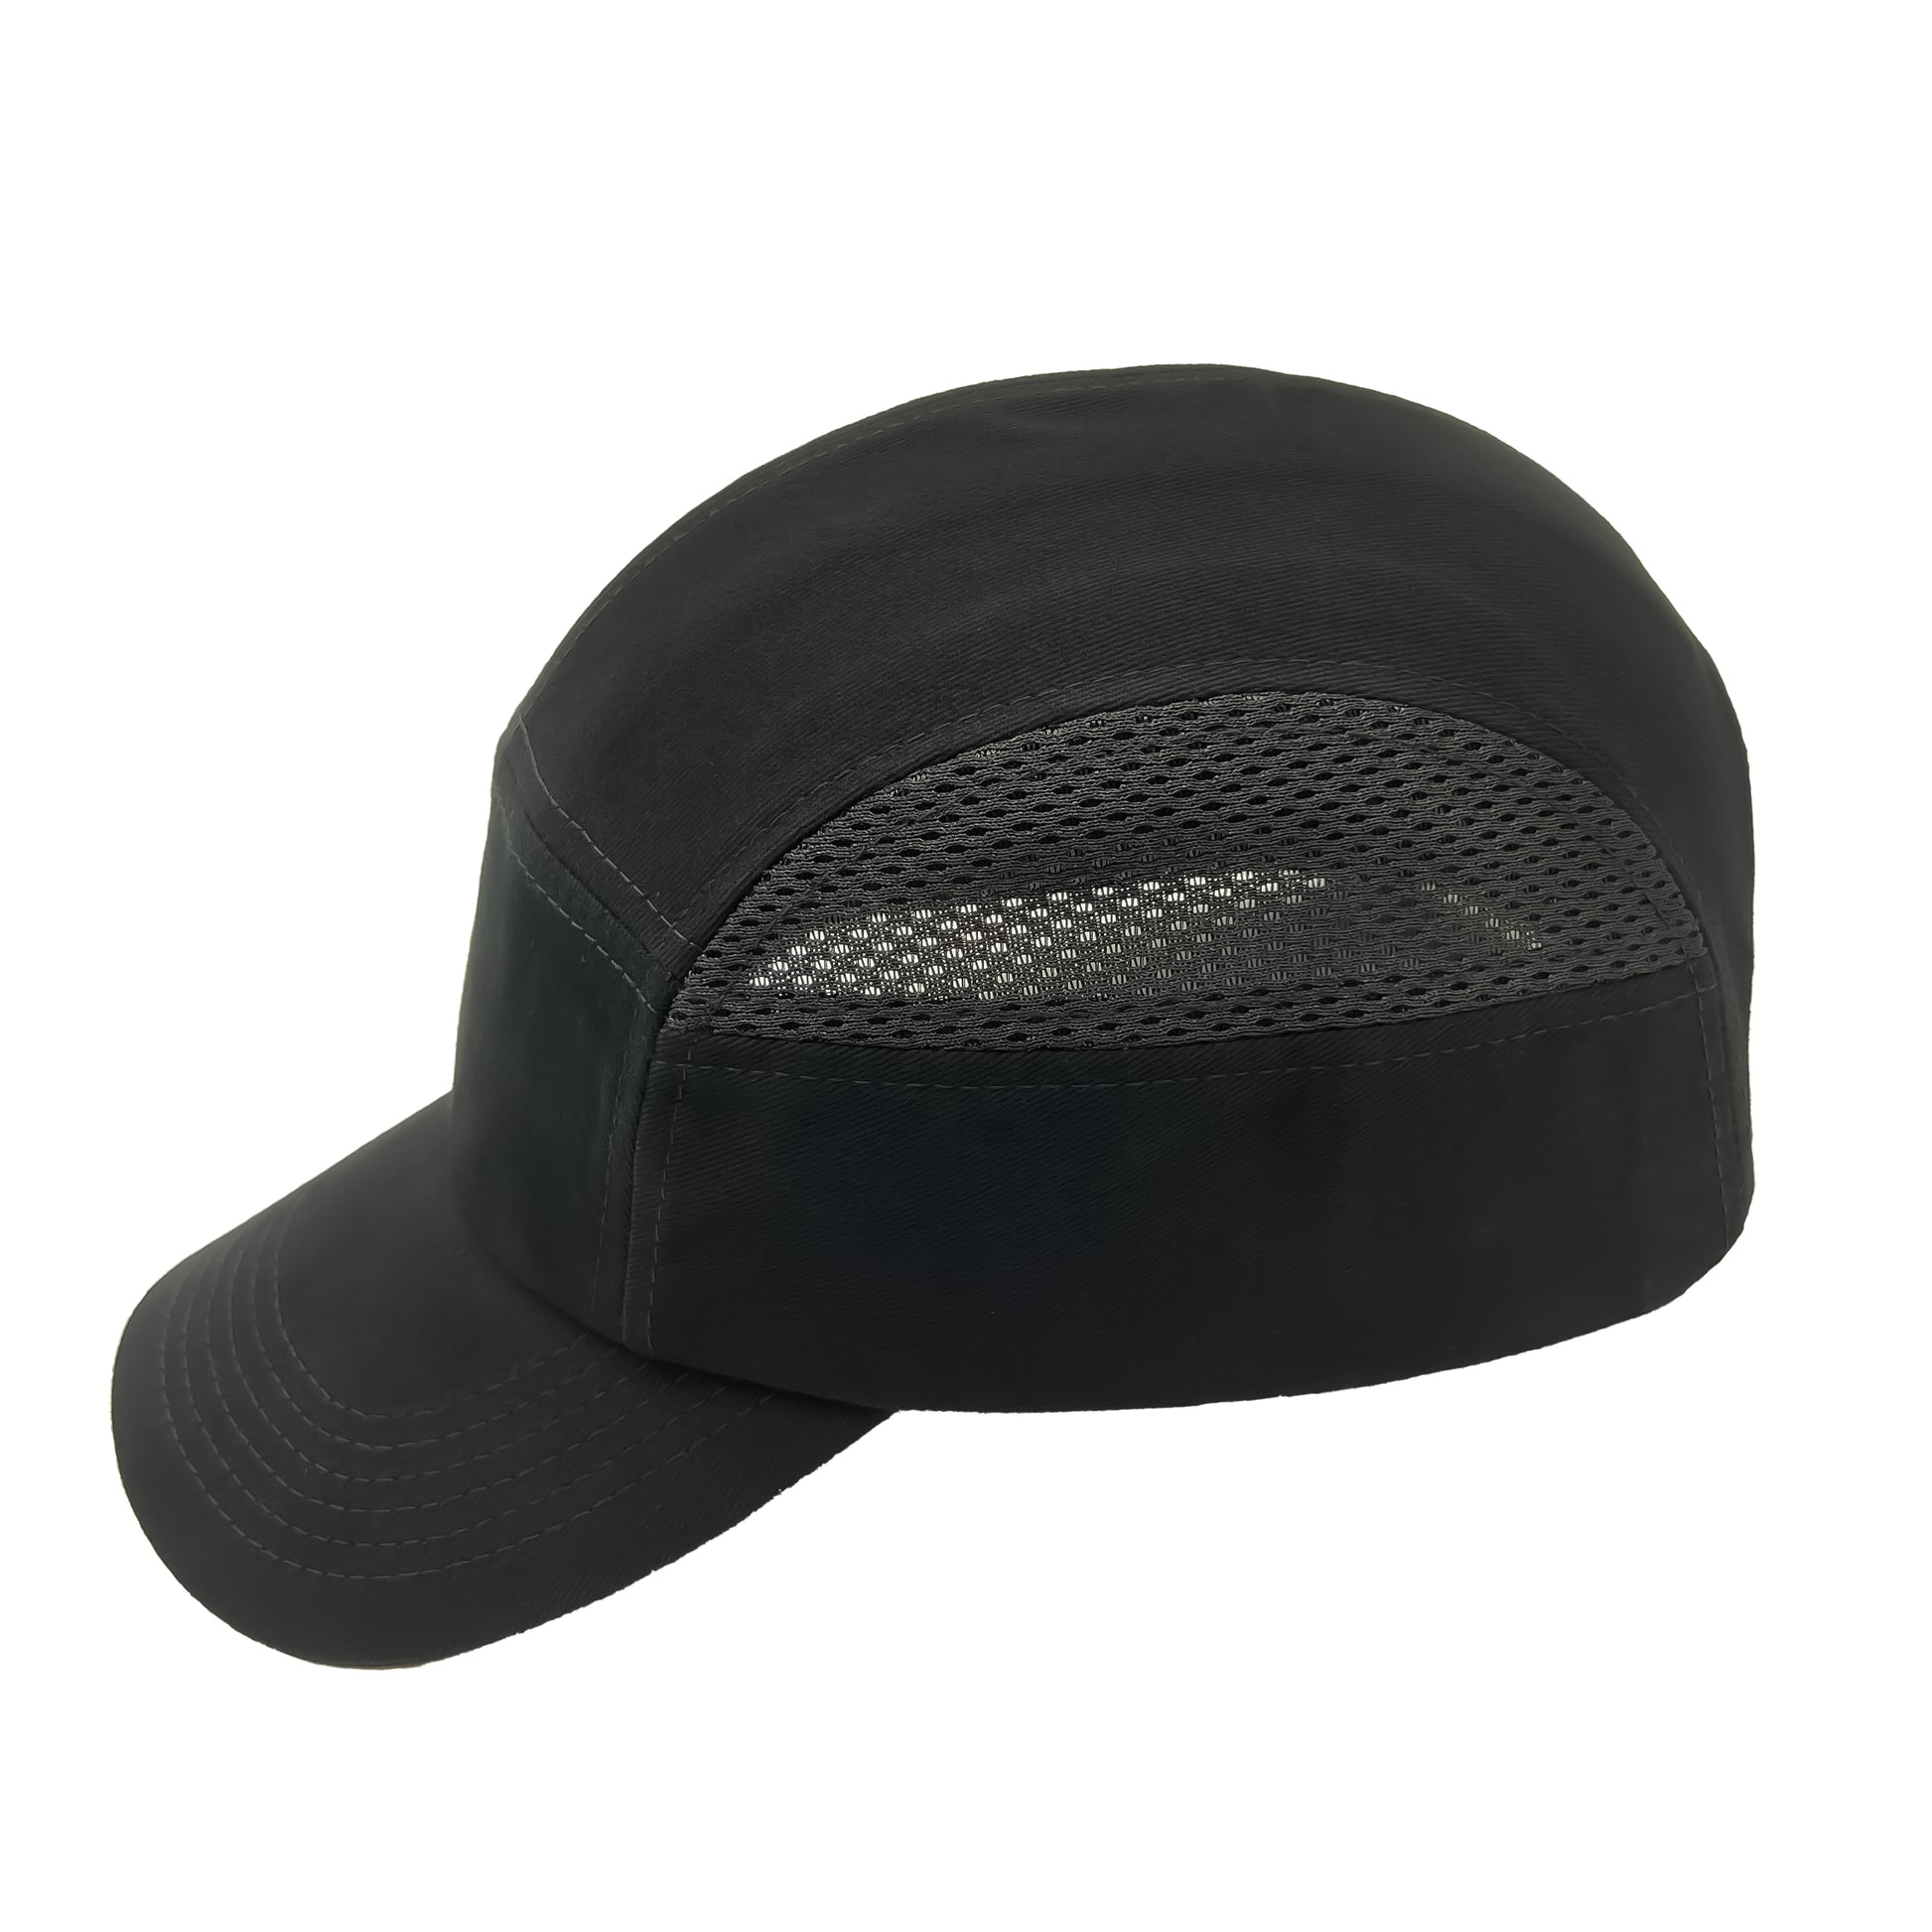 Lucent Path Mesh Black Baseball Safety Bump Cap Helmet Hard Hat Head Protection Cap for Men Women